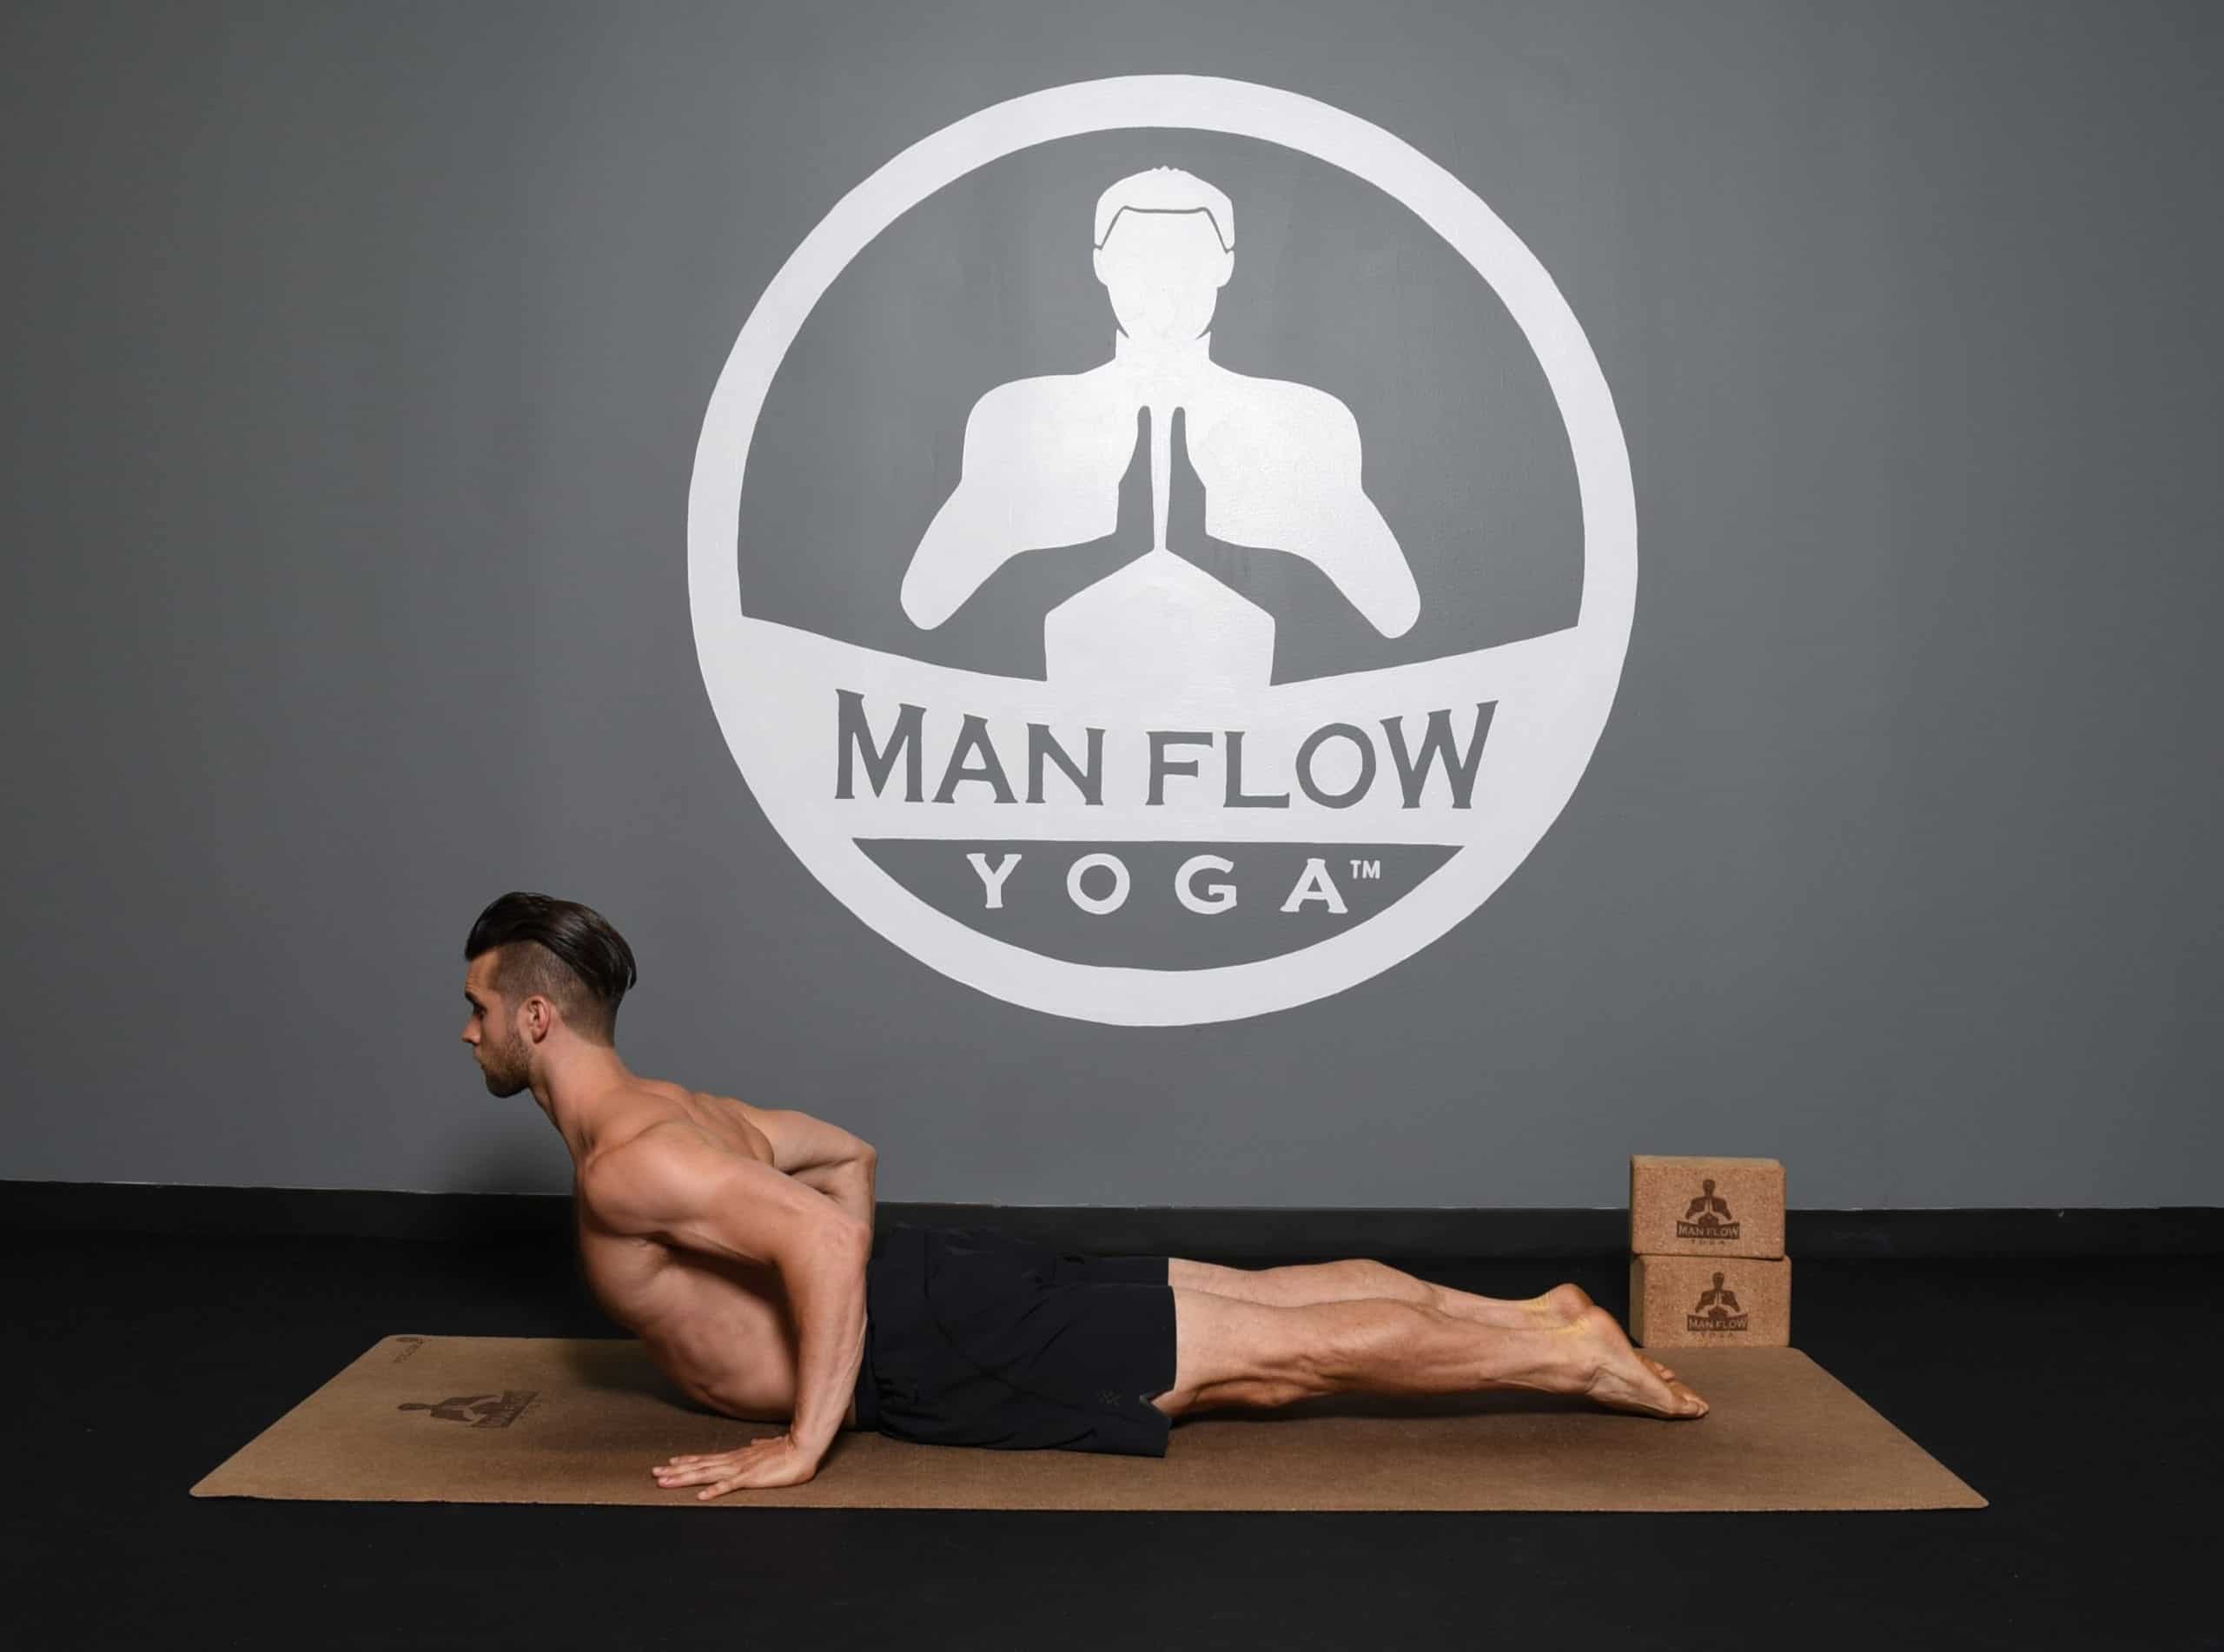 Morning Yoga Poses for Energy - Cobra Pose